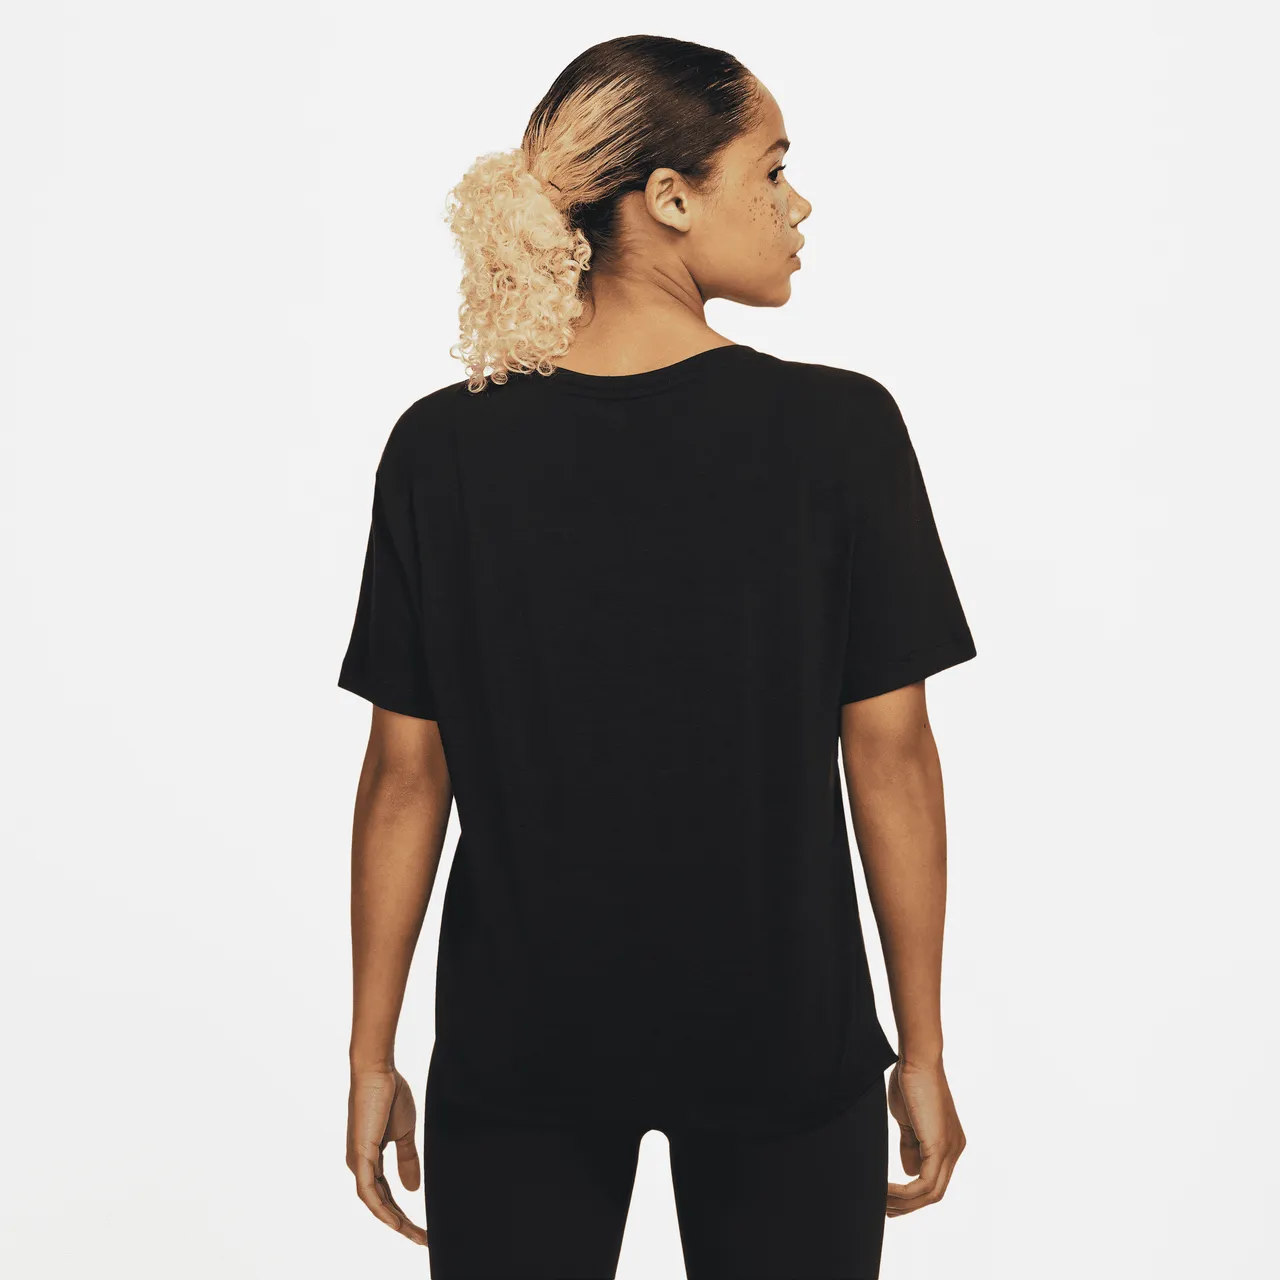 Nike Yoga Dri-FIT Women's Top - Black - Polyester